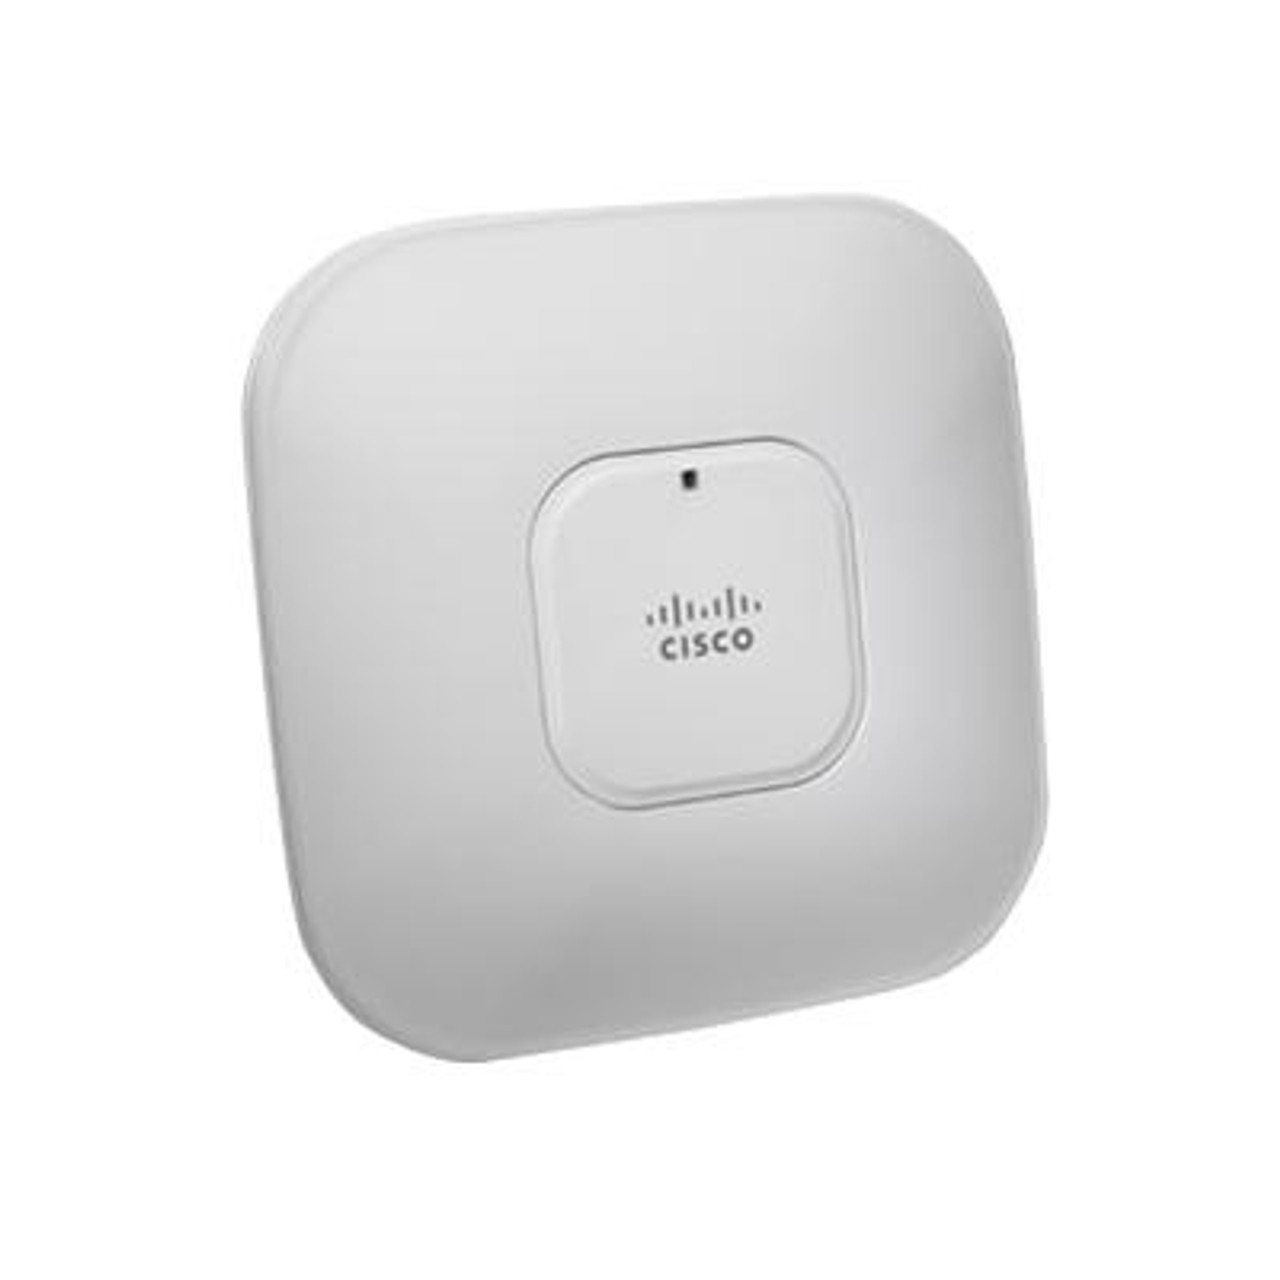 Cisco Aironet 1141 Wireless Access Point 802.11b/g/n (draft 2.0)